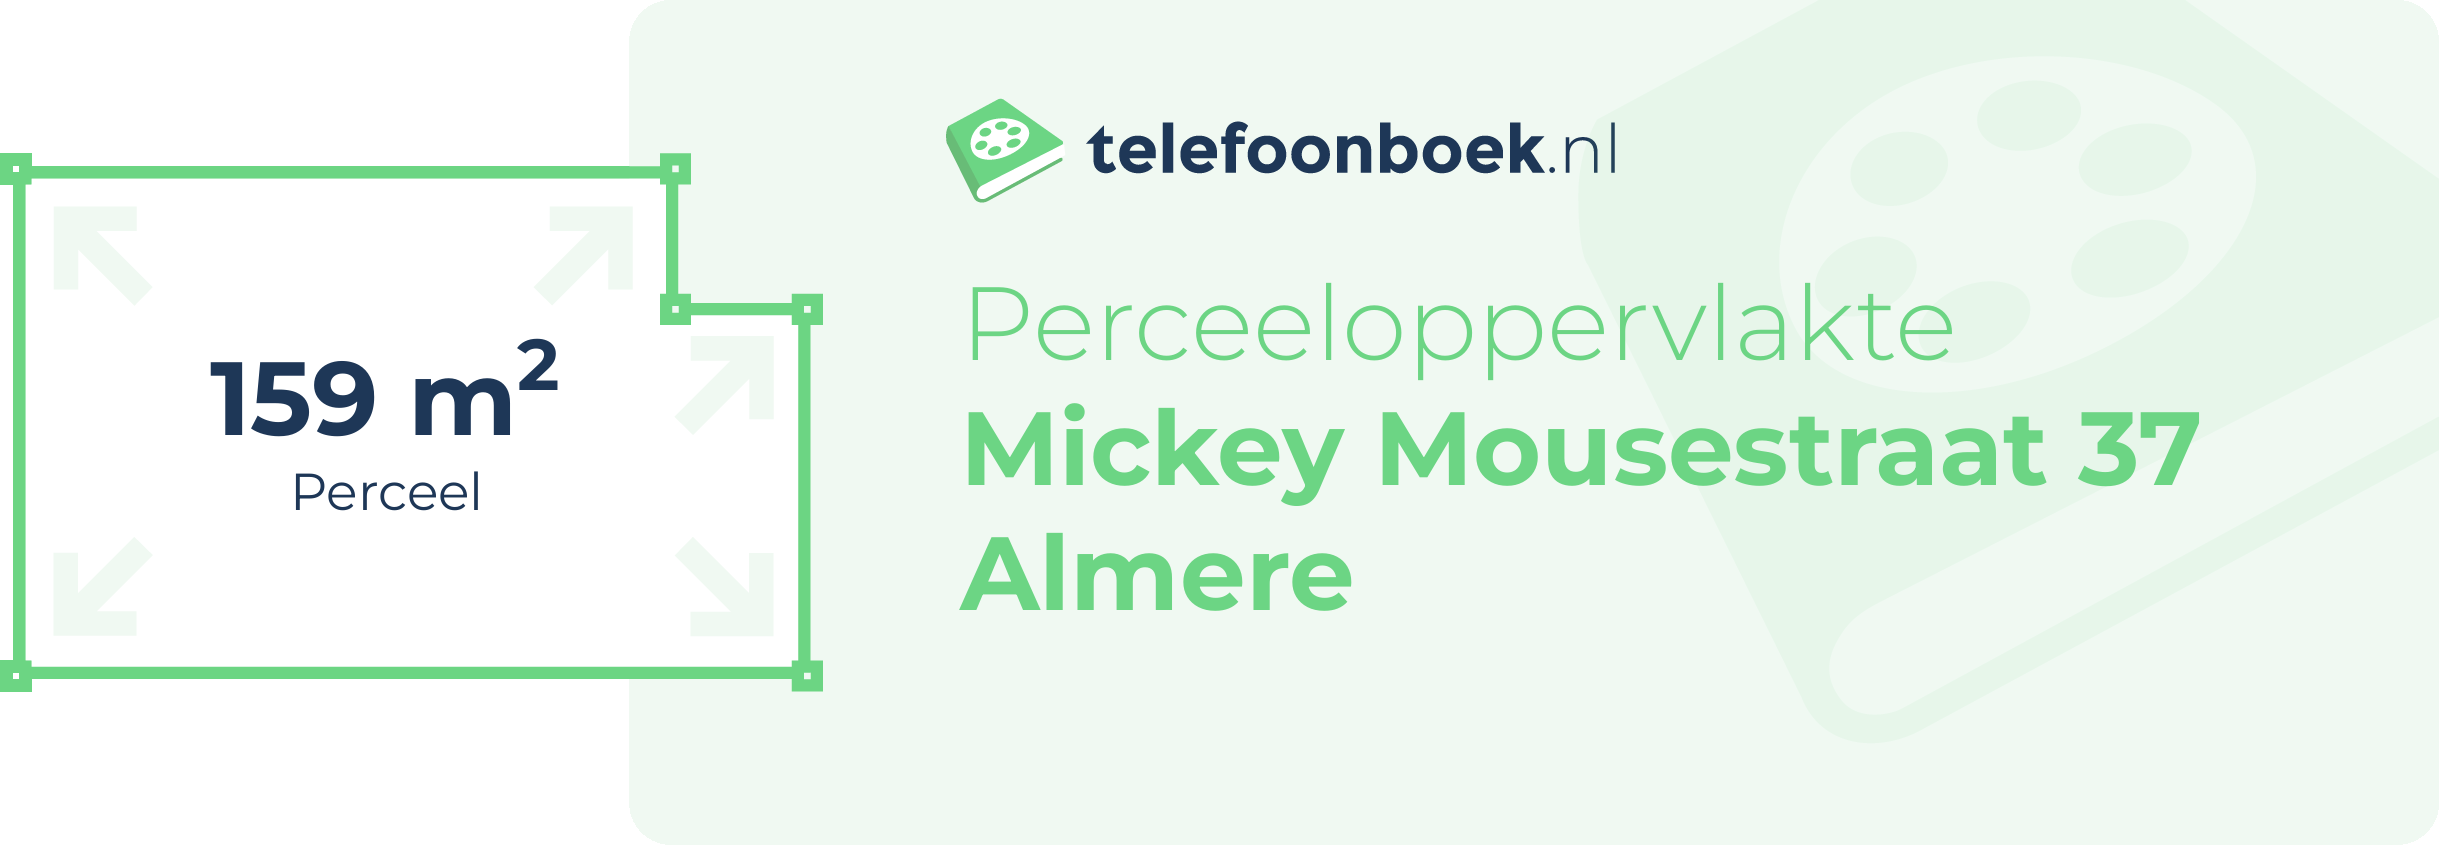 Perceeloppervlakte Mickey Mousestraat 37 Almere